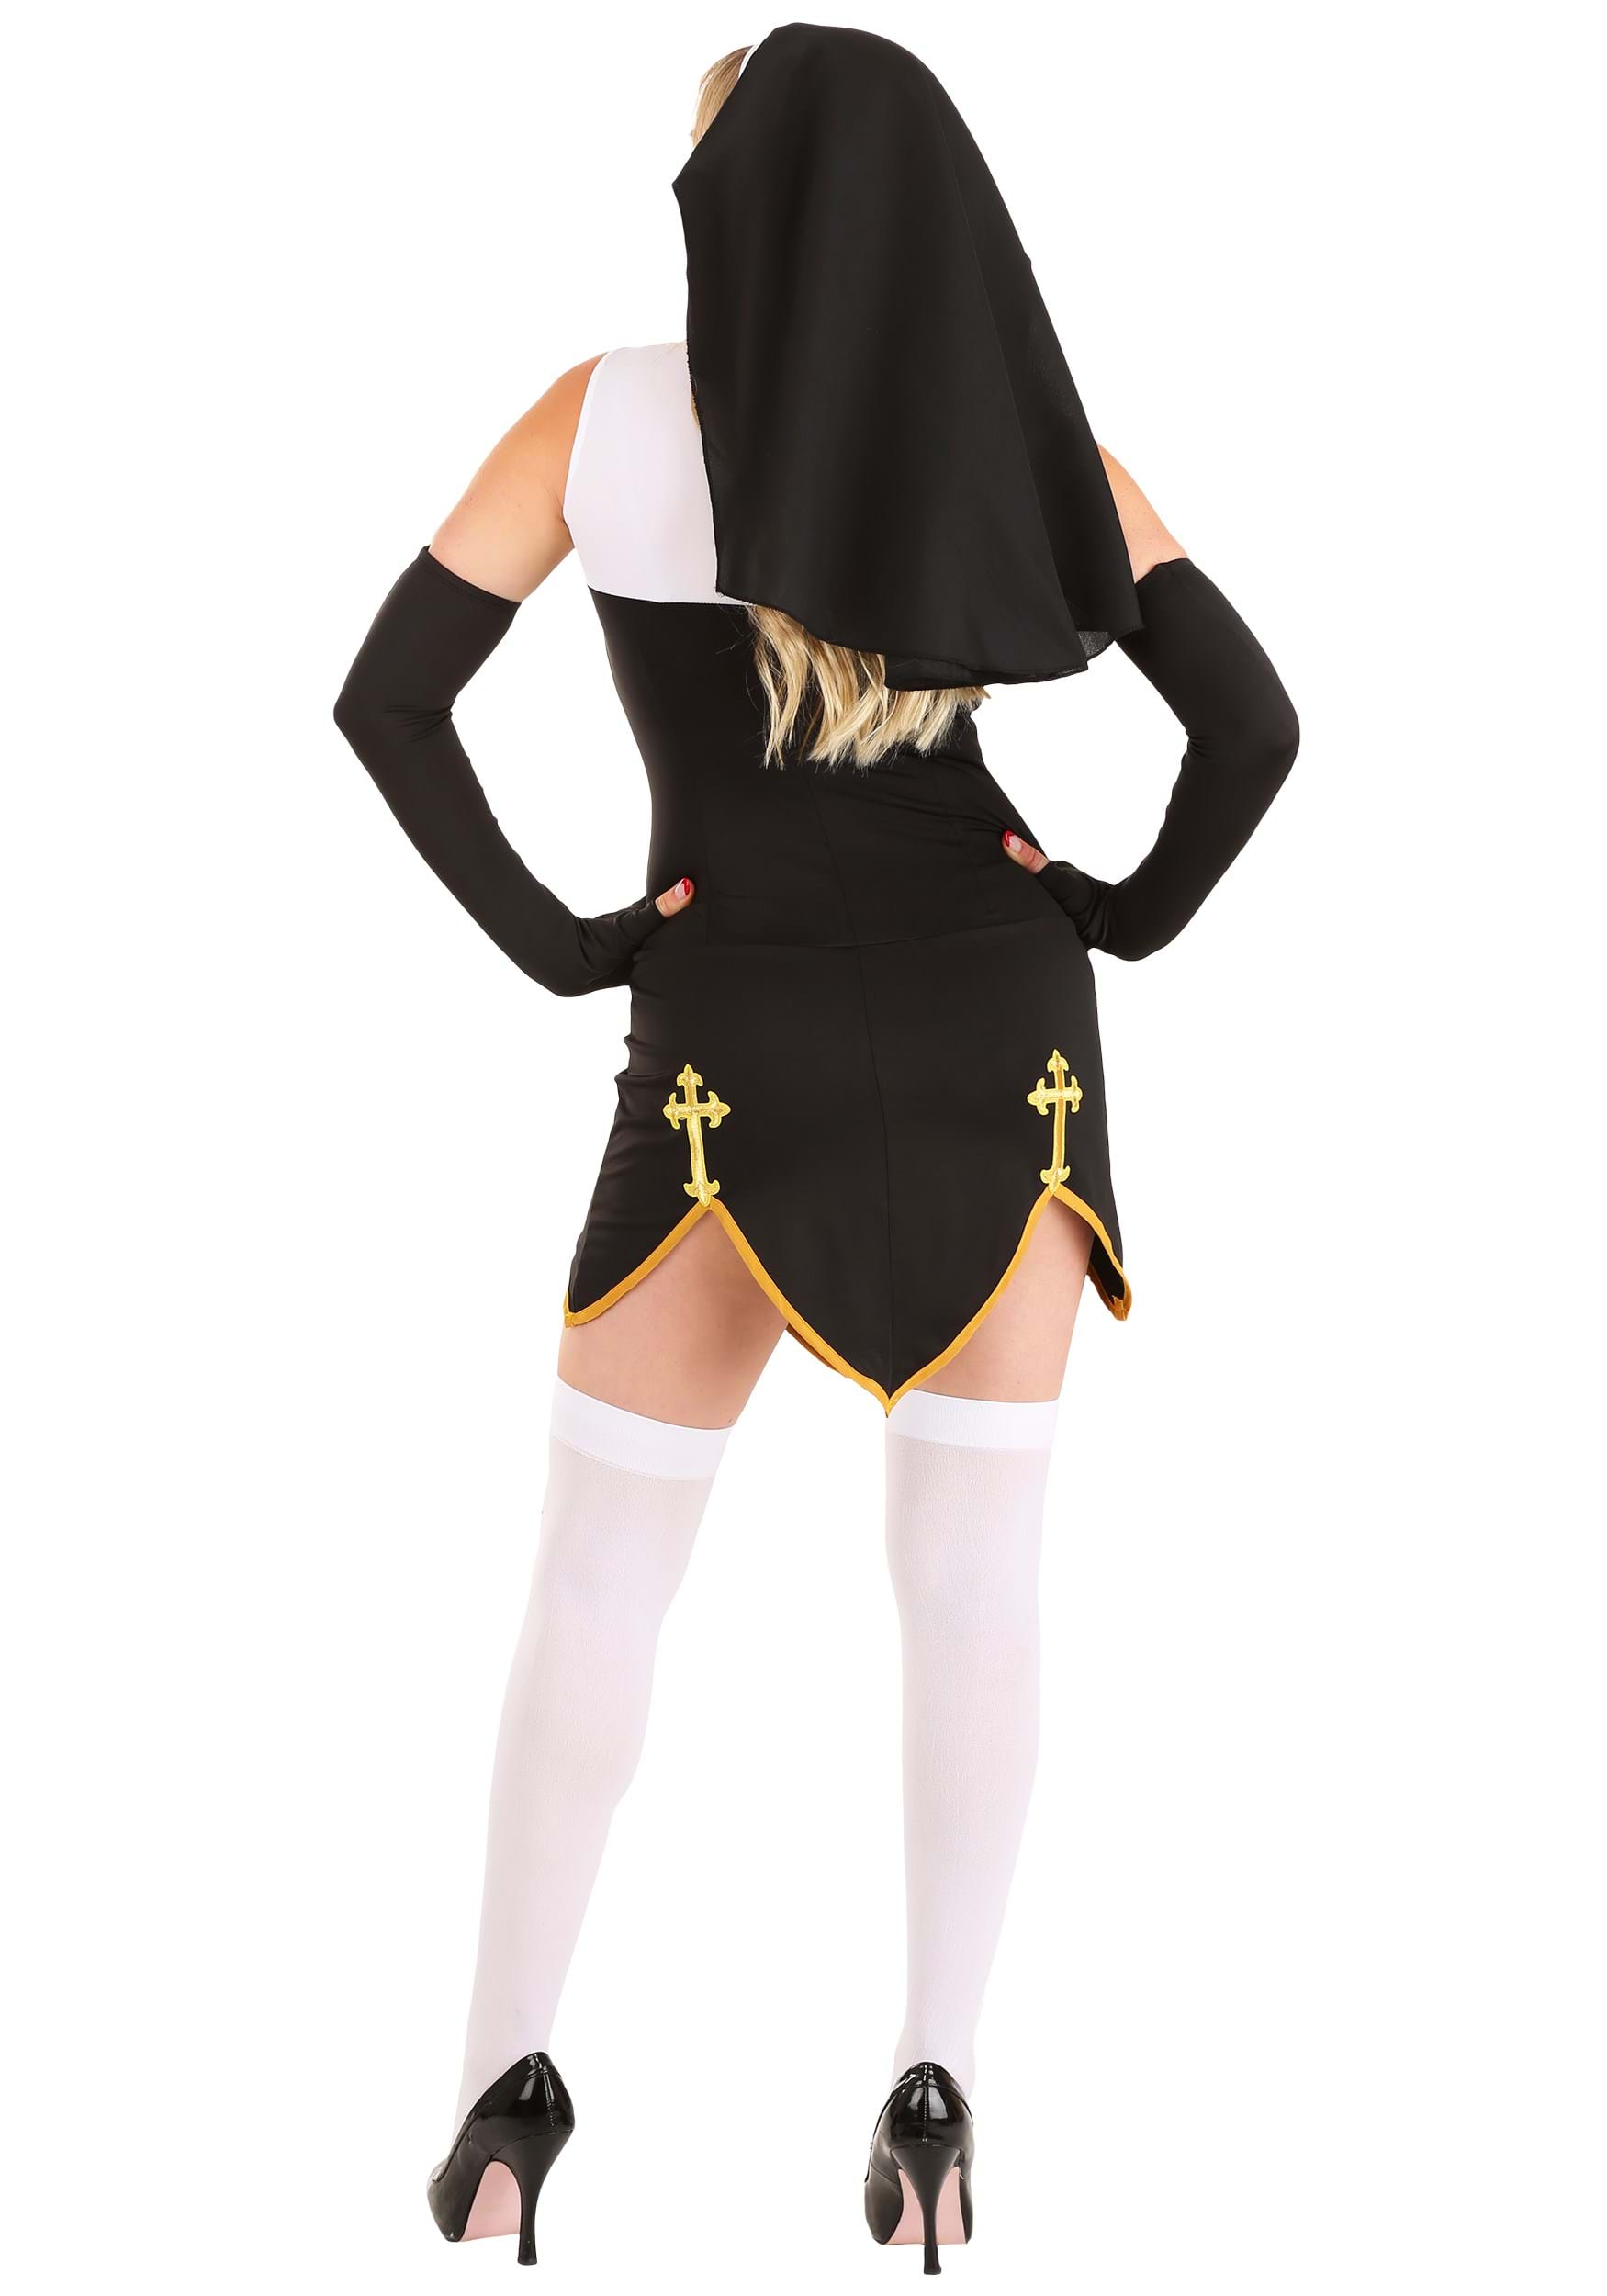 Bad Habit Nun Fancy Dress Costume For Women W/ Dress & Thigh High Stockings